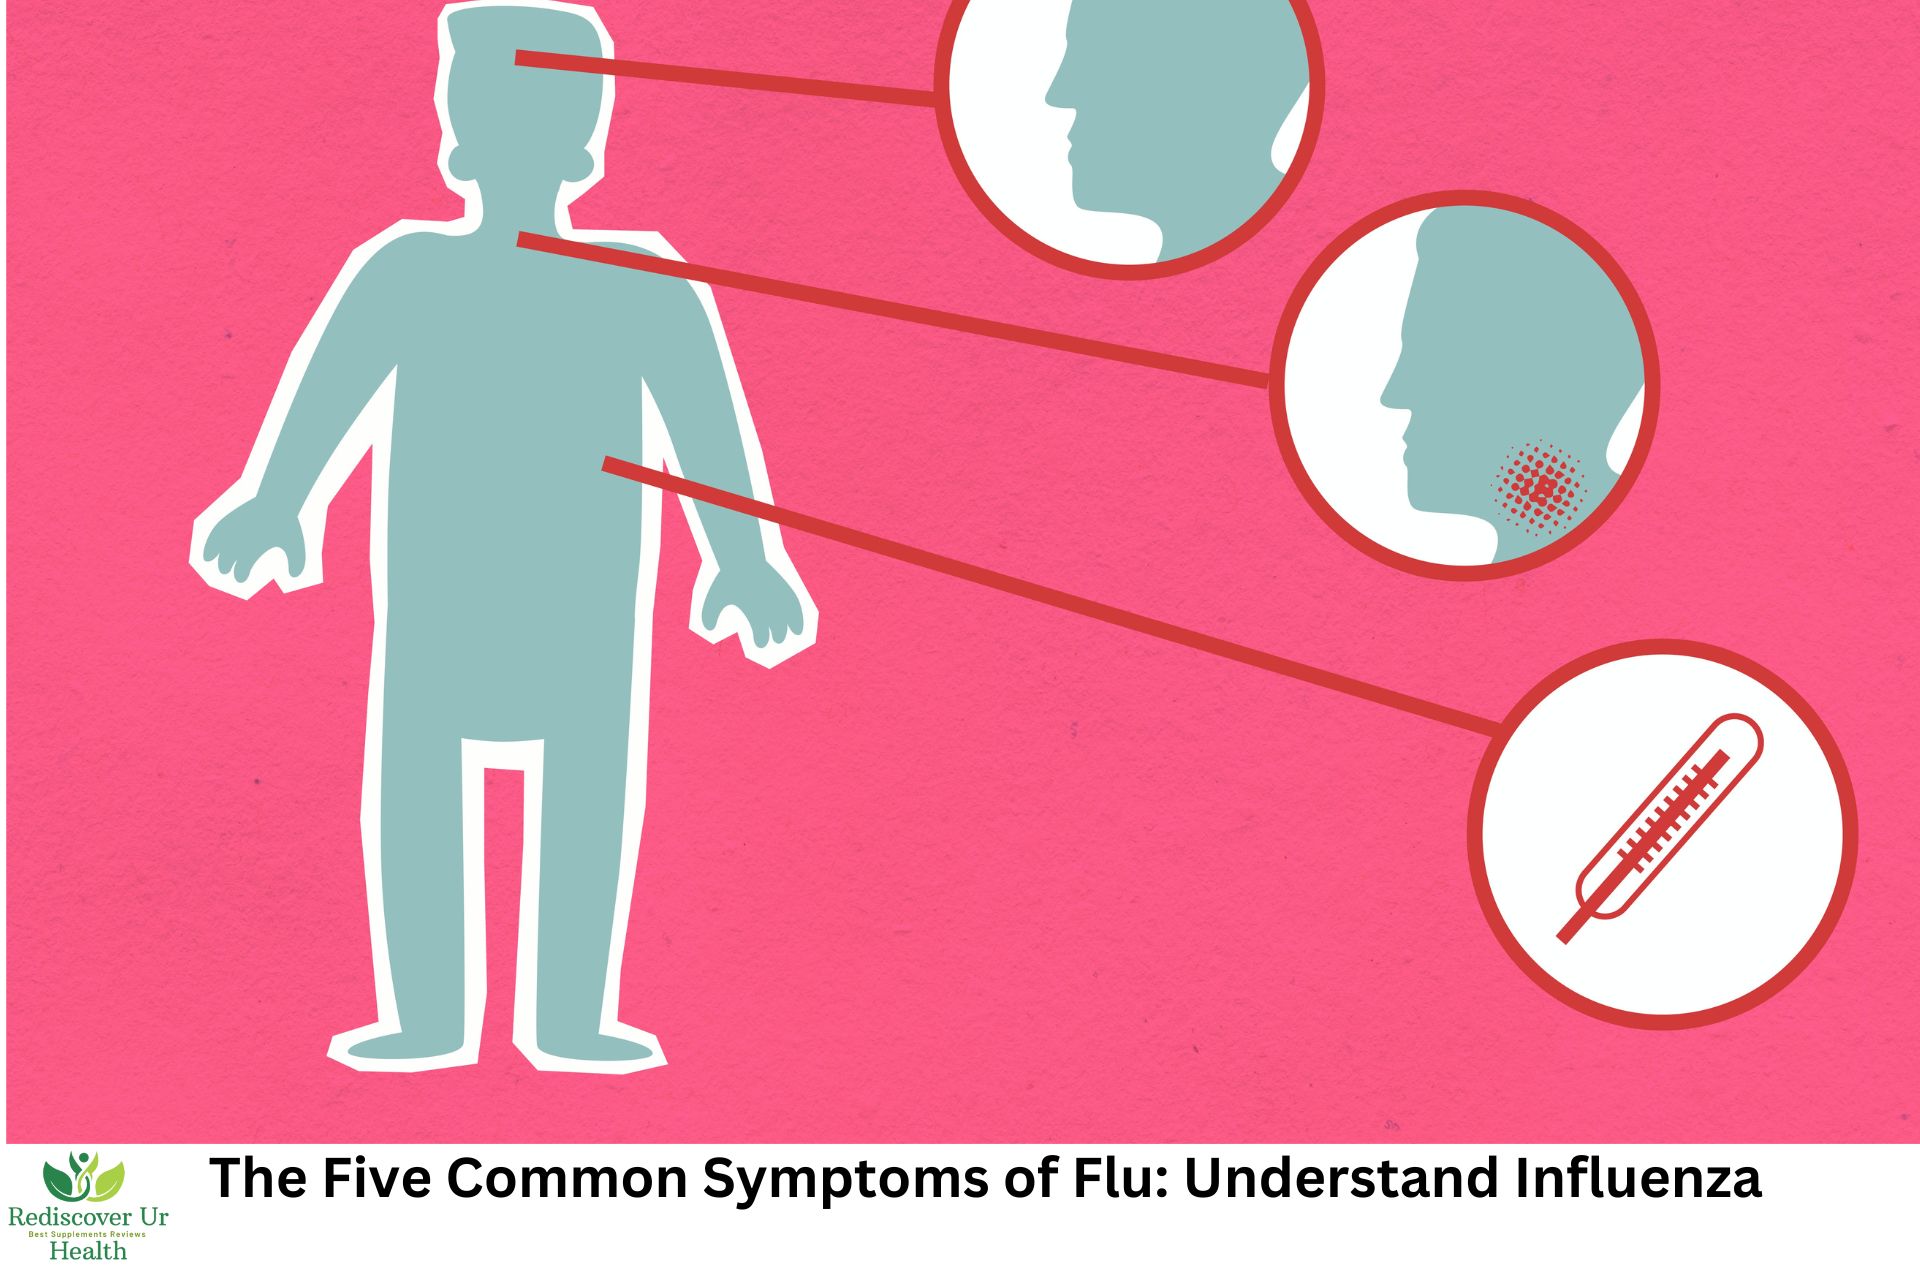 The Five Common Symptoms of Flu: Understand Influenza